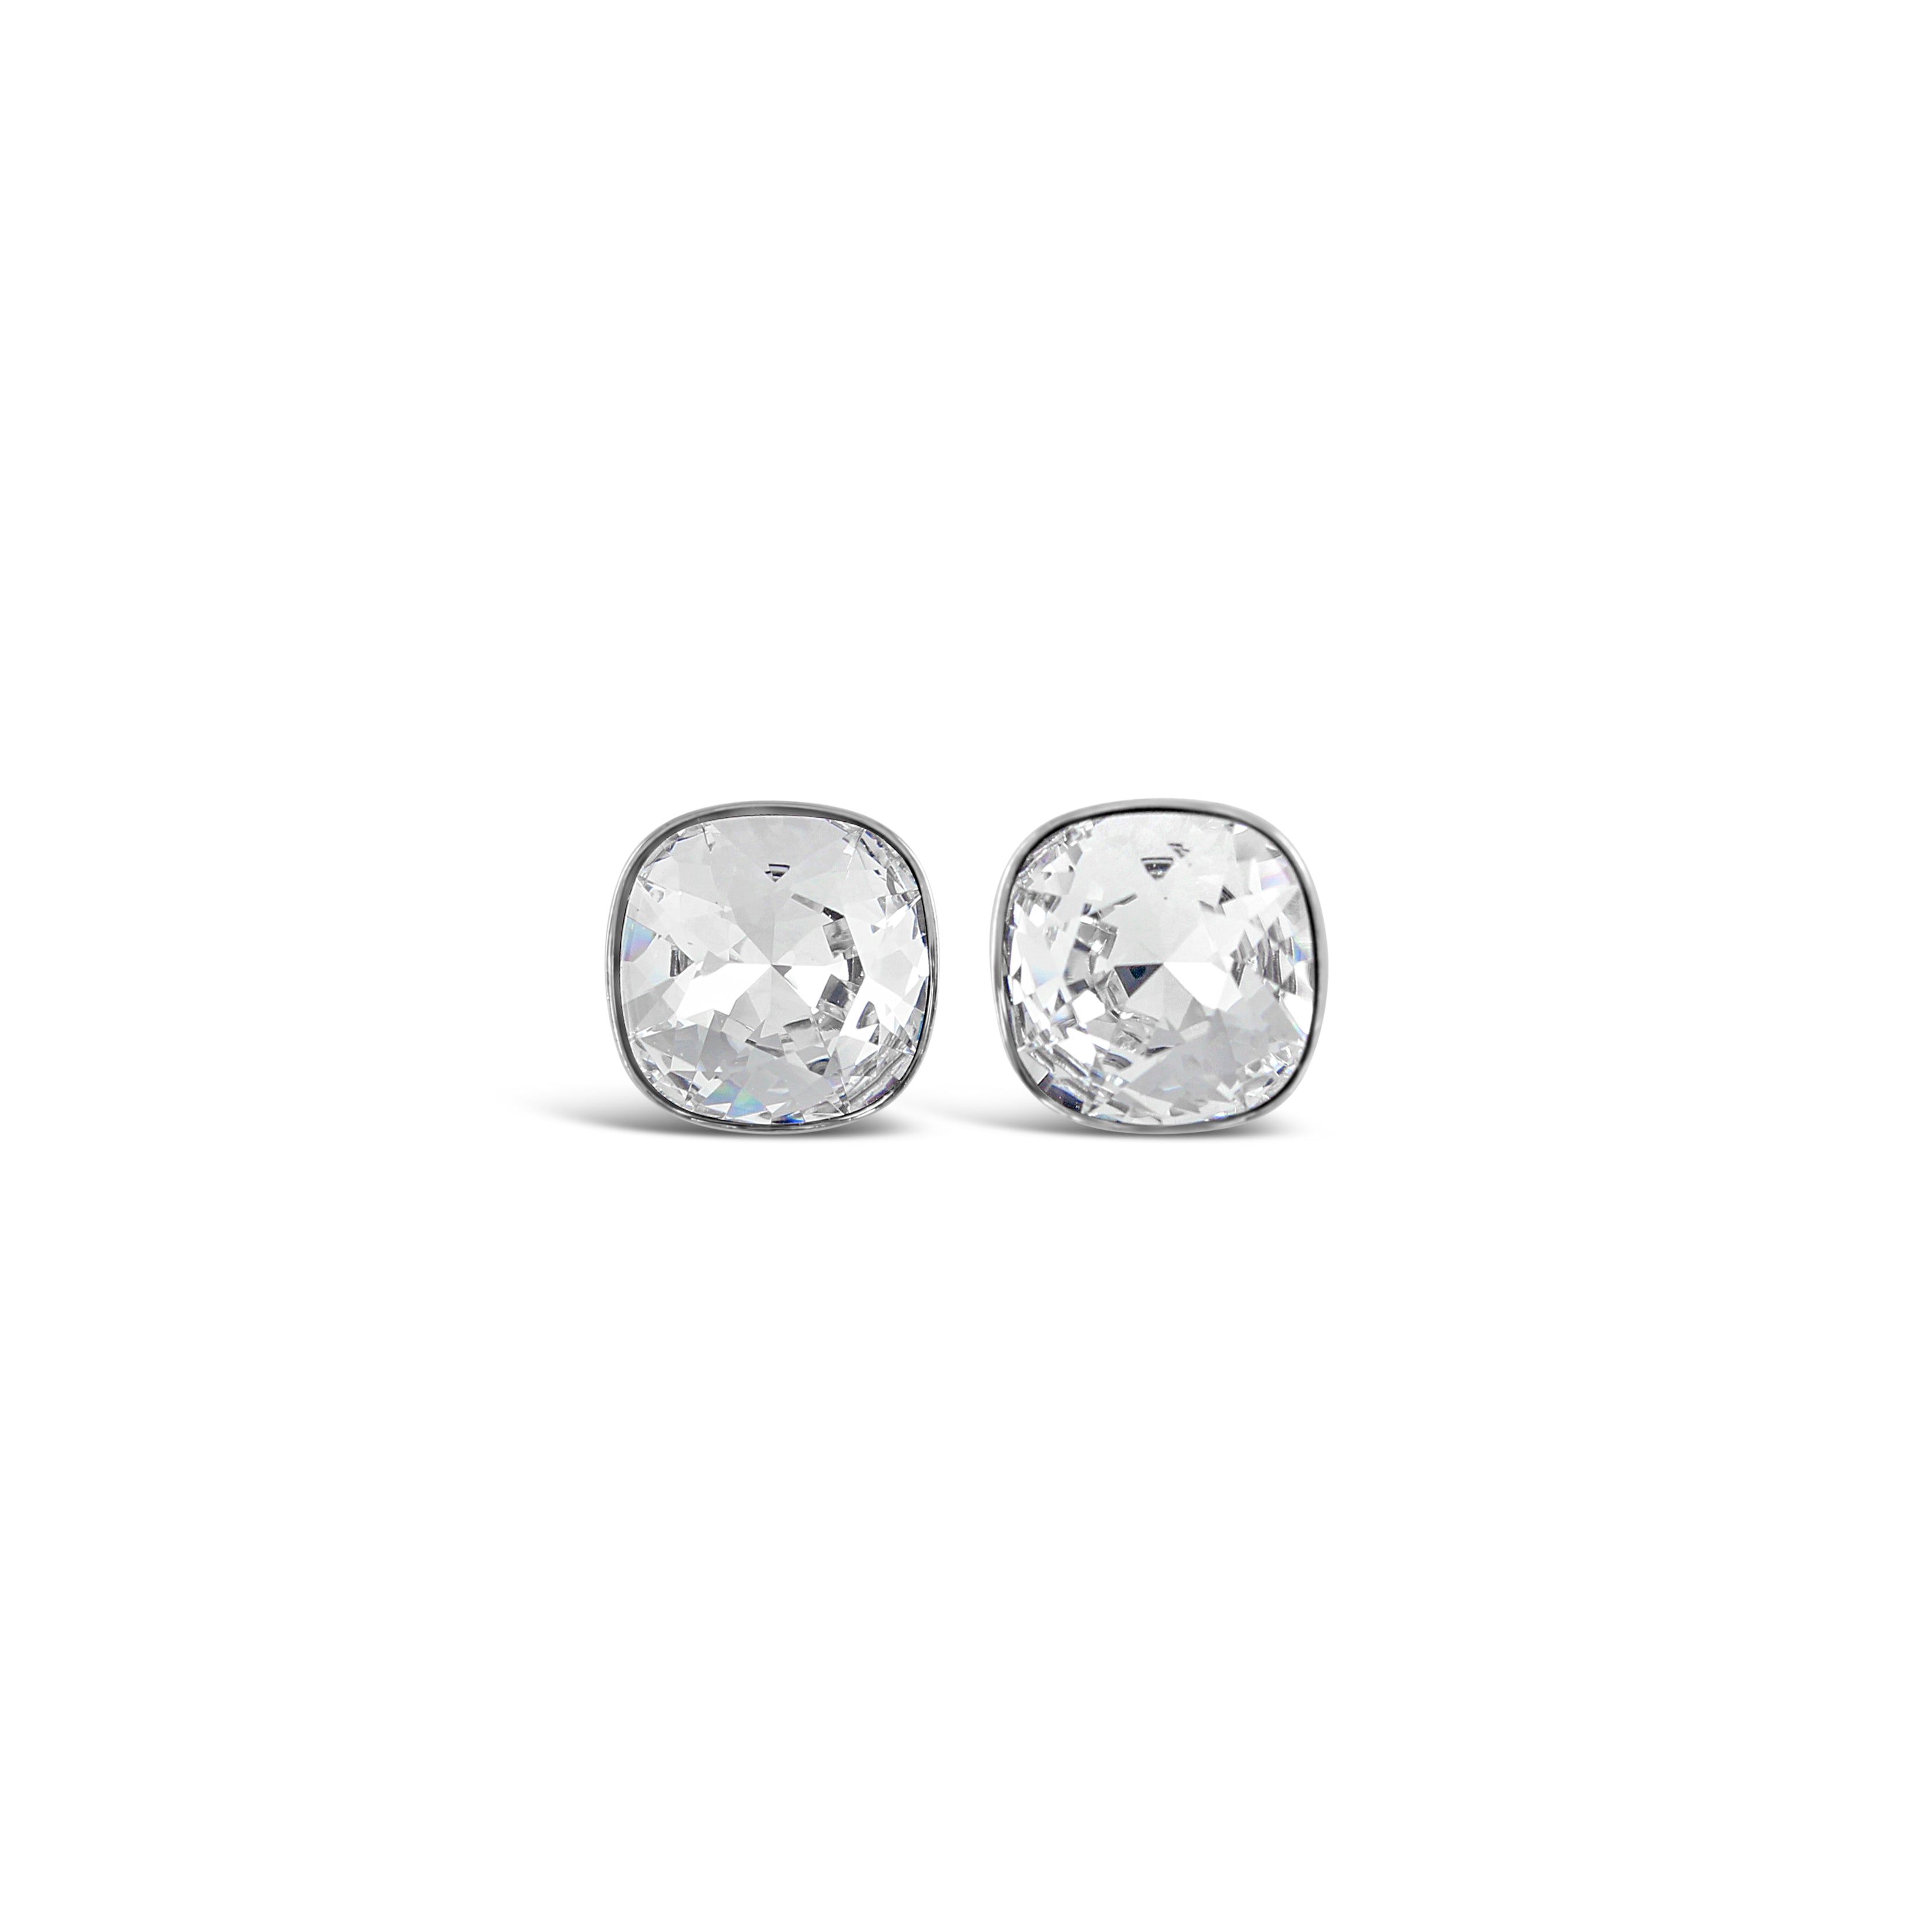 Ceroc - Sterling Silver 10mm Stud Earrings (Crystal Clear)